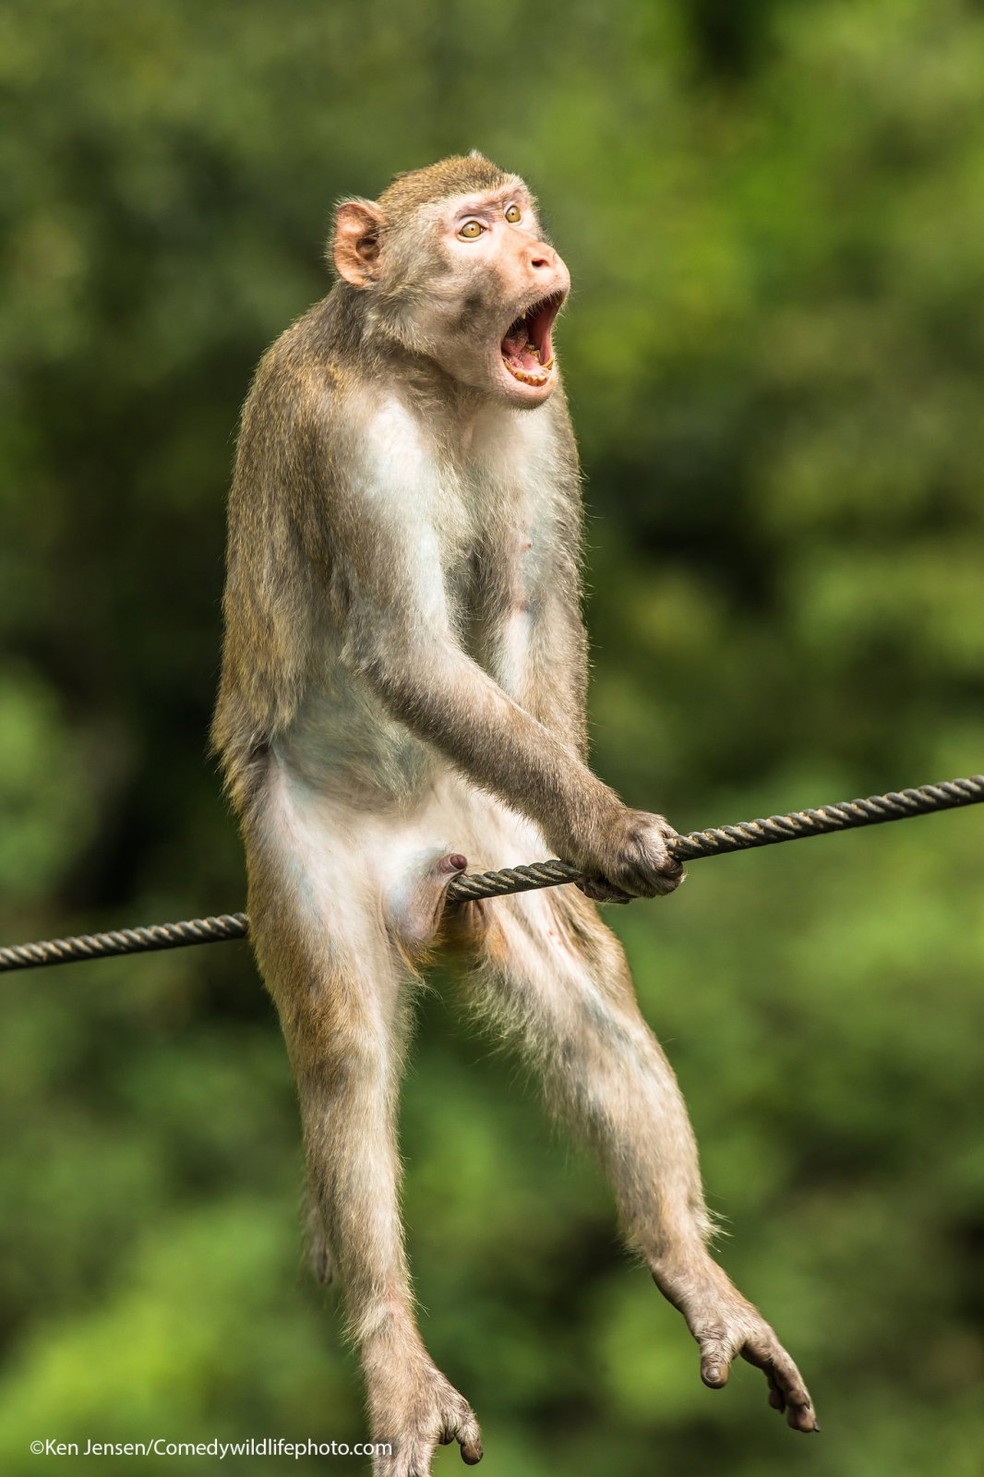 Foto de macaco feita na China, batizada de "Ouch!", é a ganhadora do Comedy Wildlife Photo de 2021. — Foto: Ken Jensen